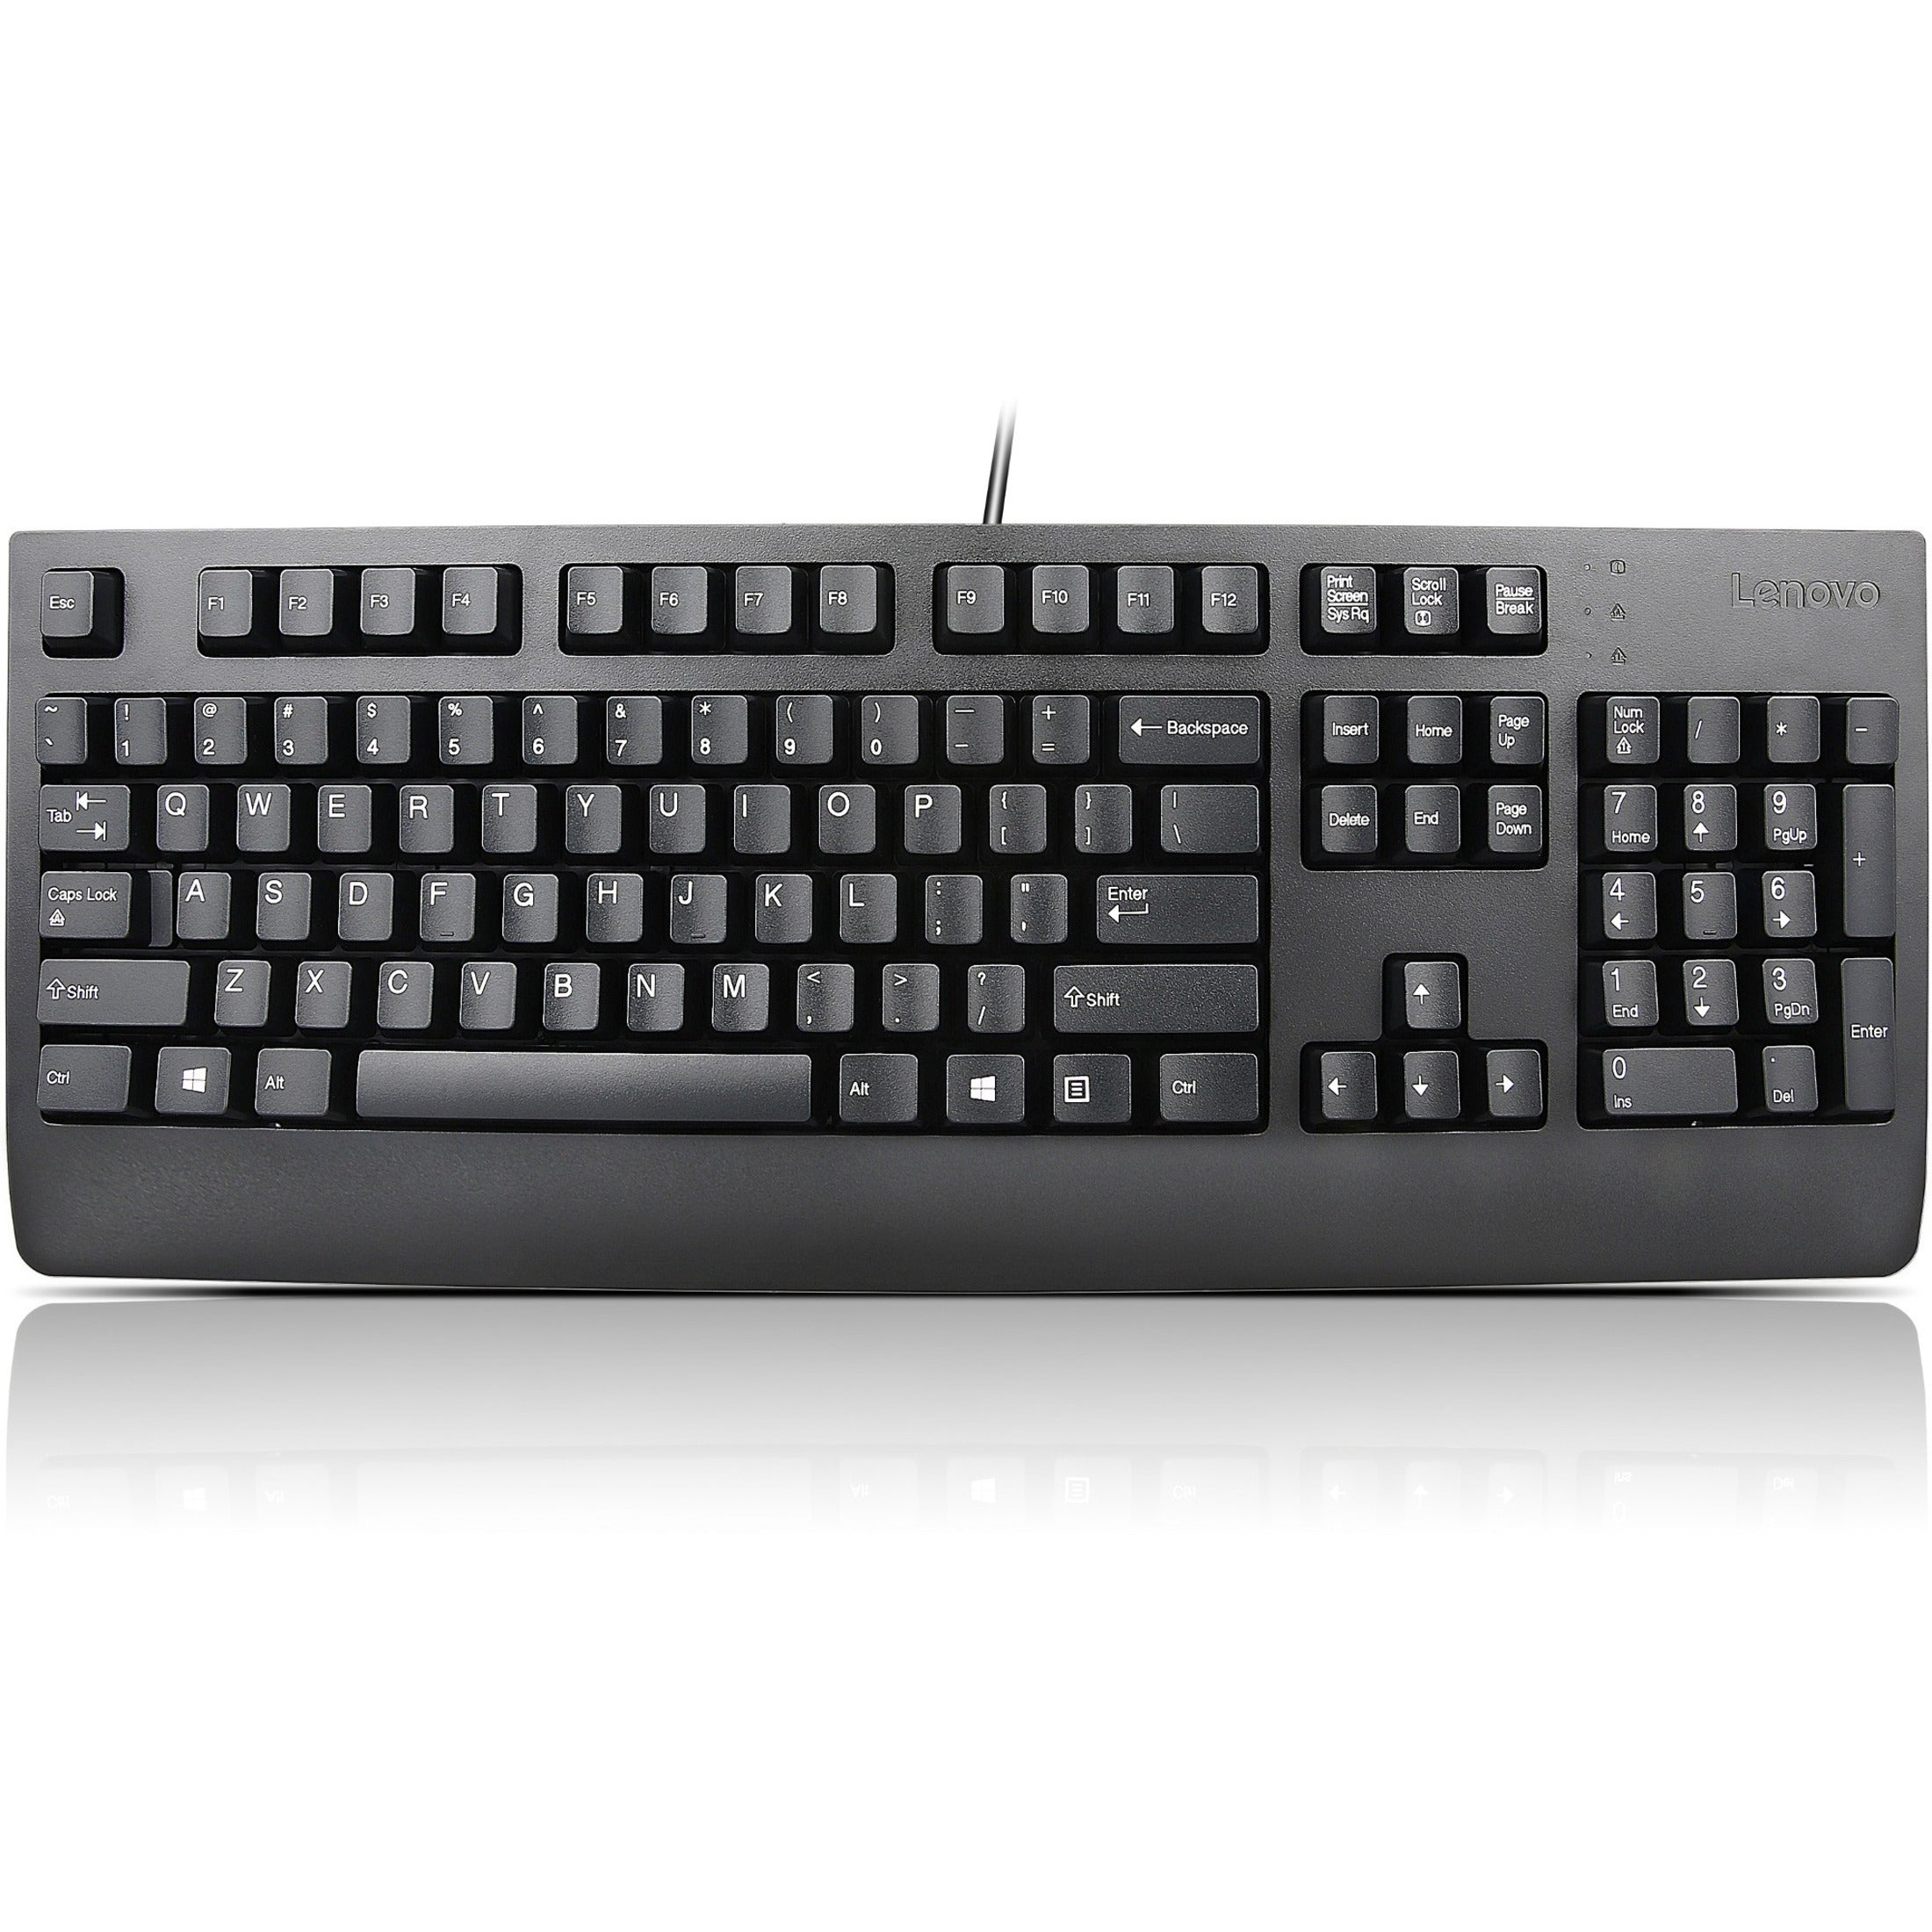 Lenovo 4X30M86879 USB Keyboard Black US English 103P, QWERTY Layout, Rubber Dome Keys